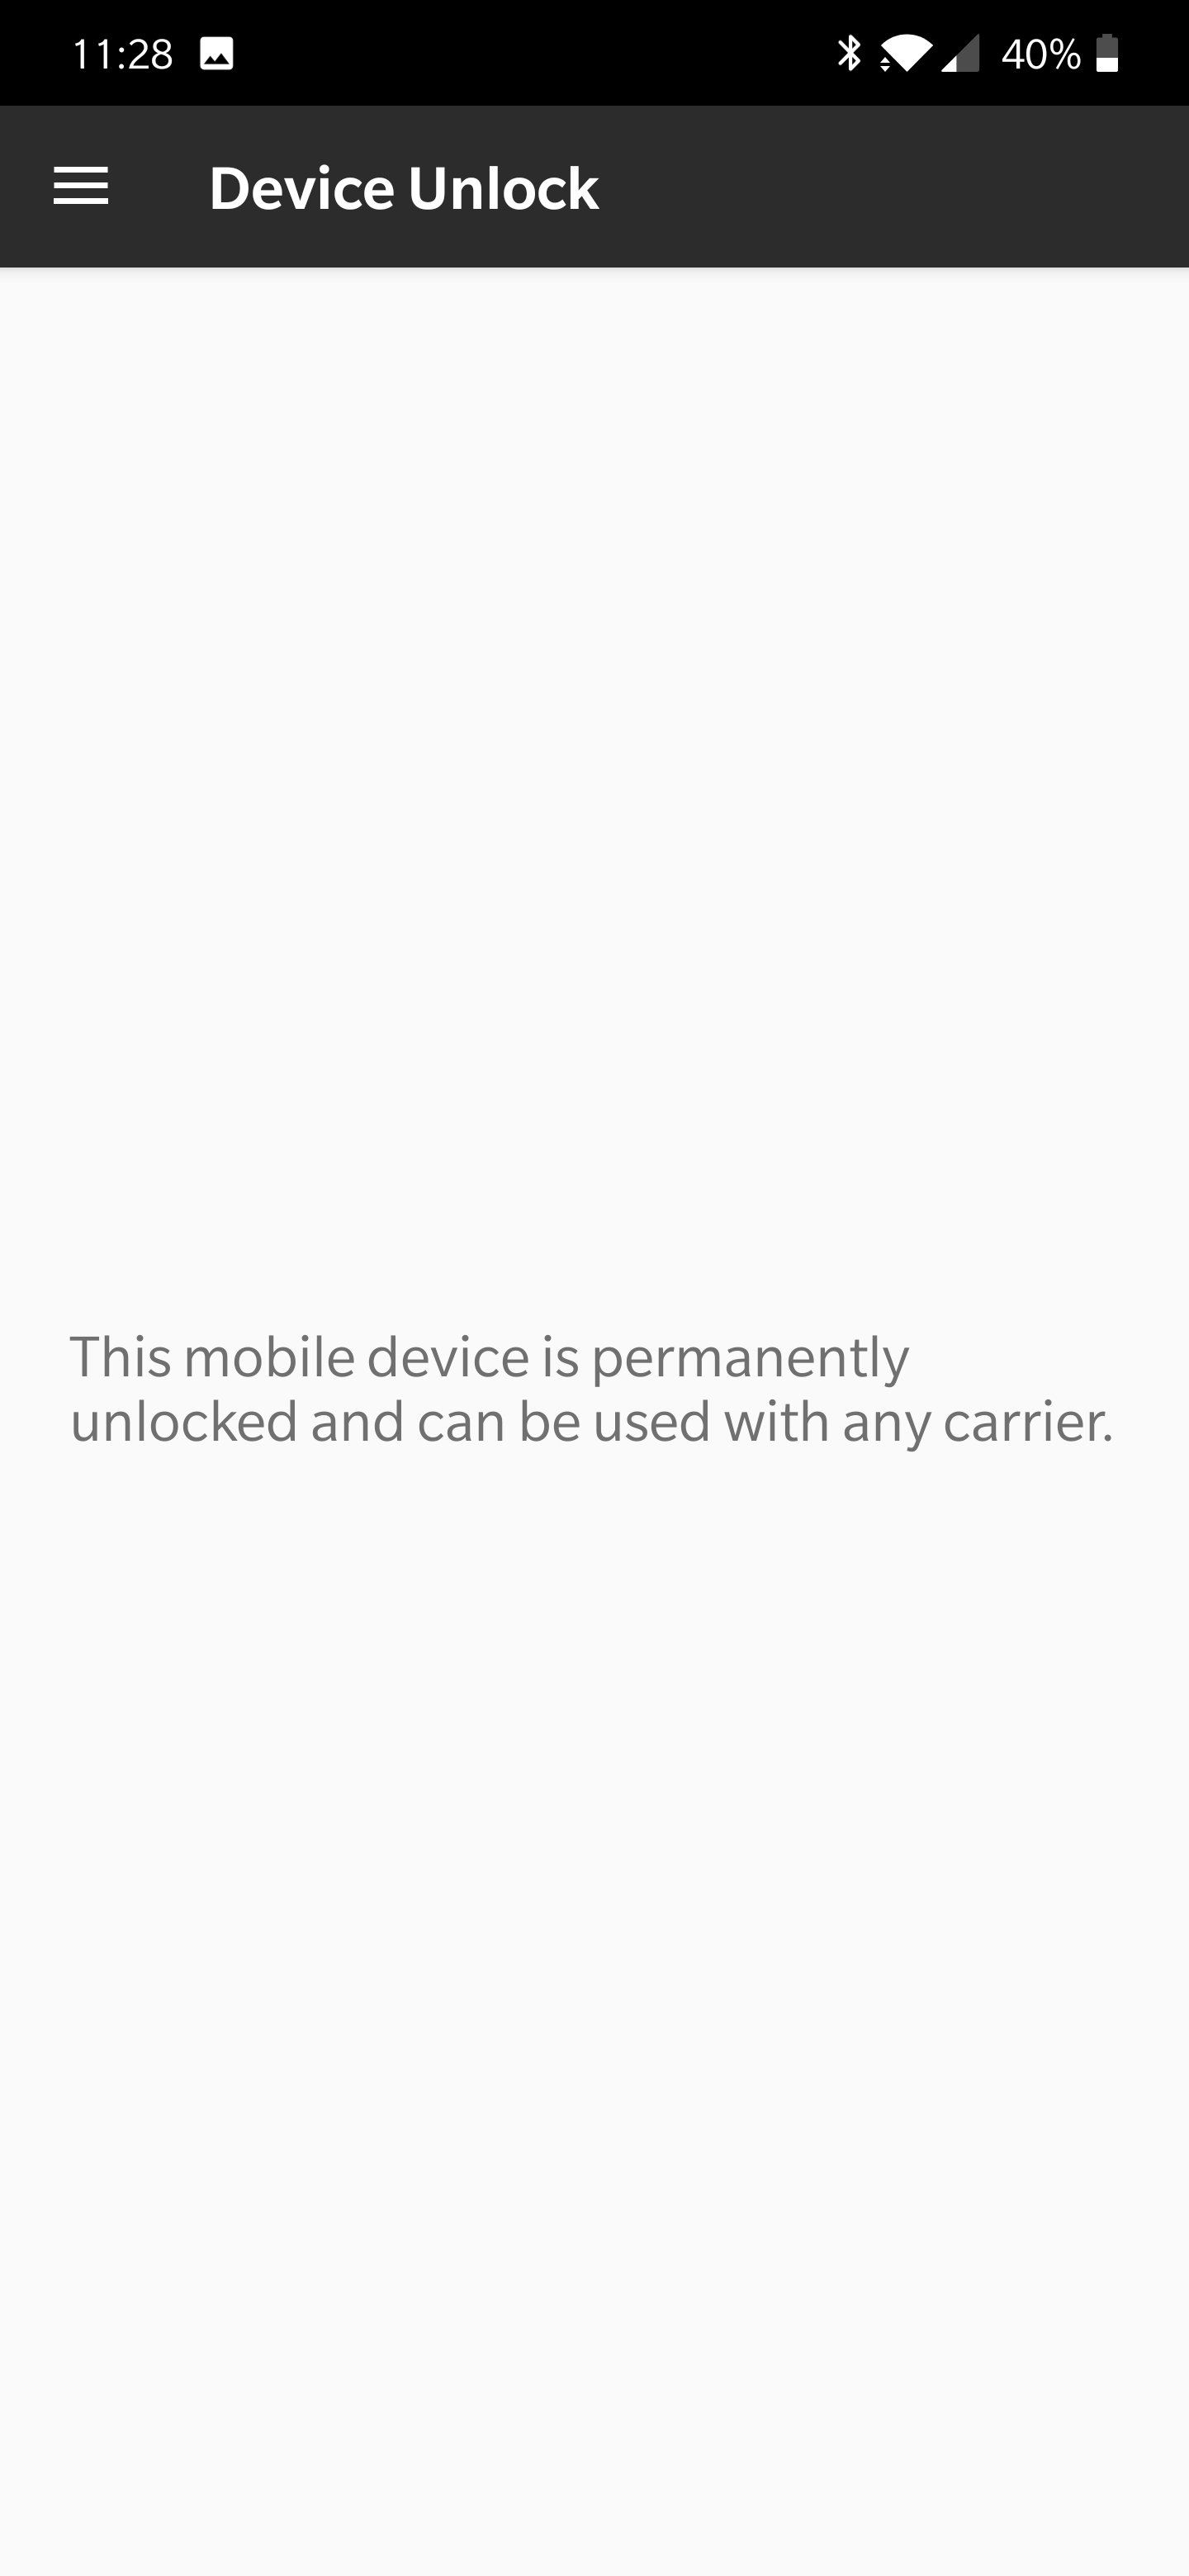 T-Mobile Device Unlock